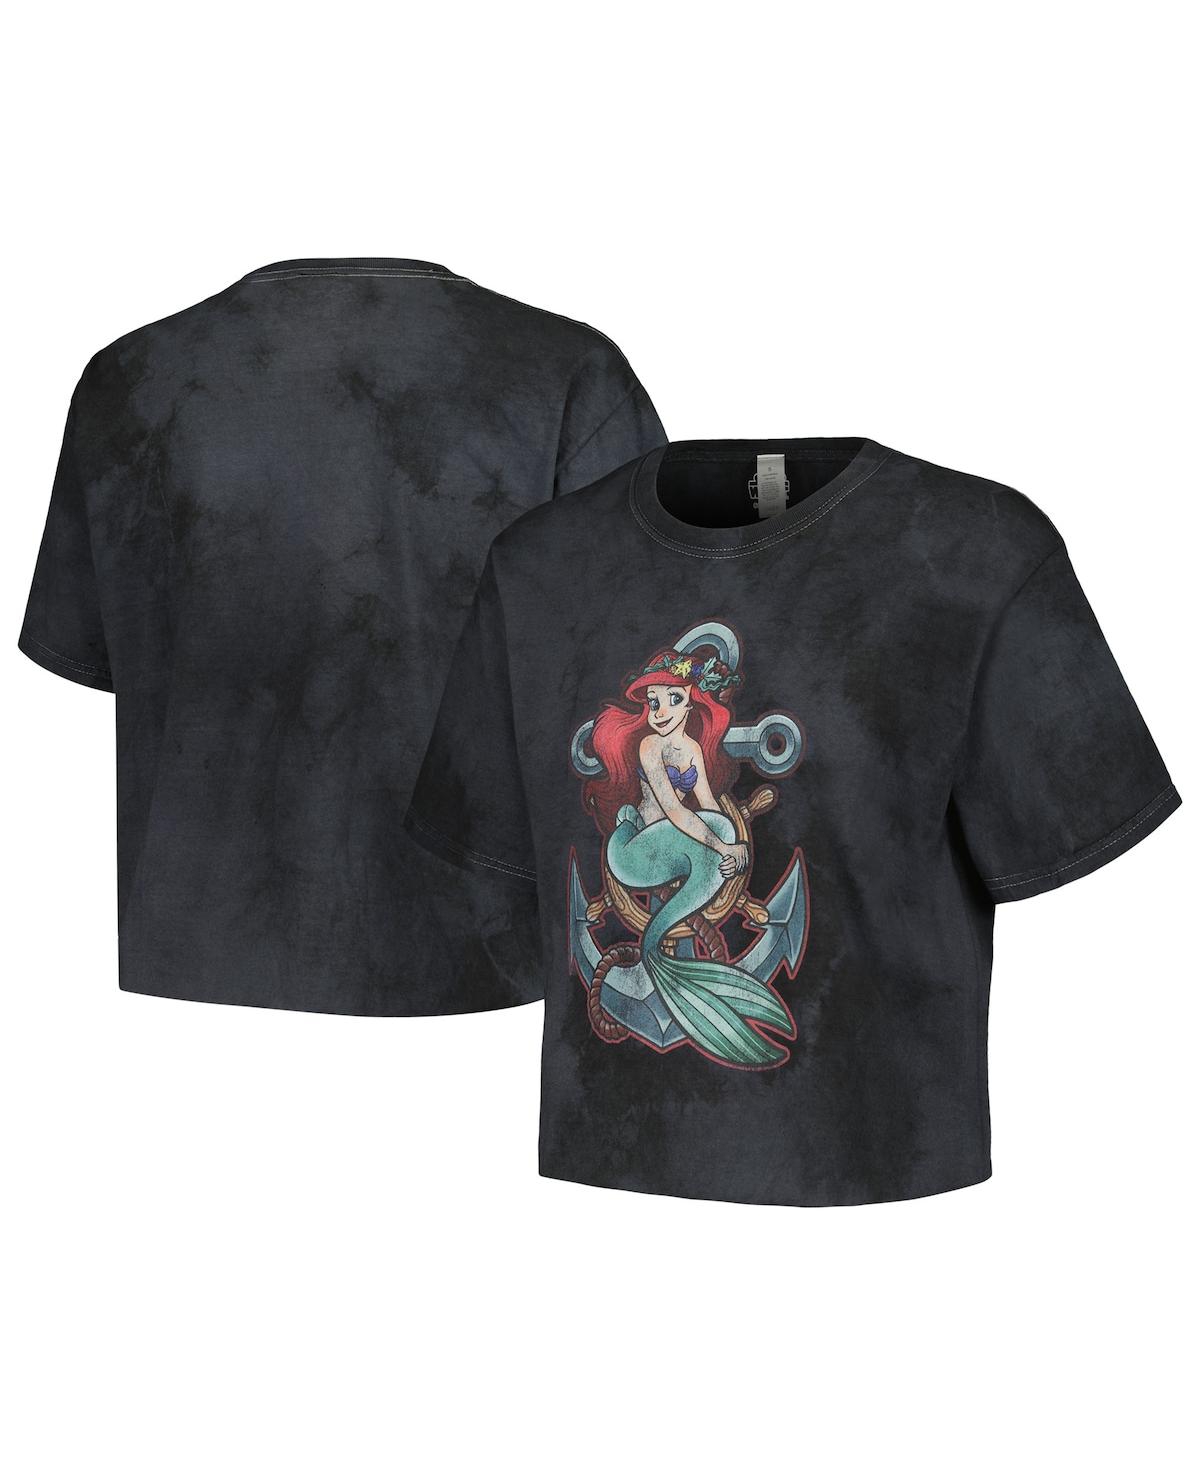 Men's and Women's Black The Little Mermaid Anchor T-shirt - Black